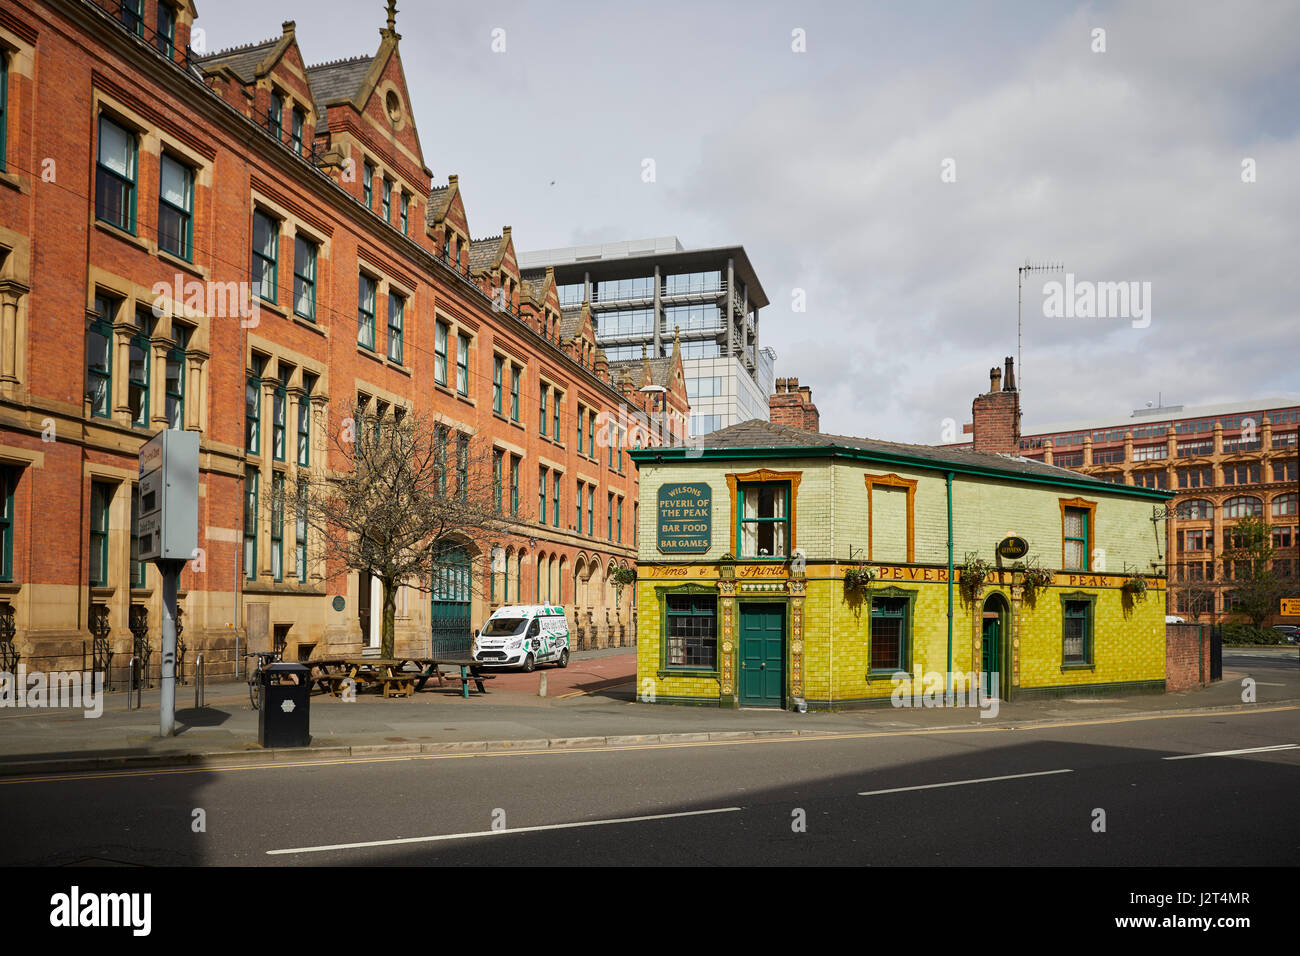 Landmark Manchester green tiled clad Victorian pub Peveril of the Peak Stock Photo